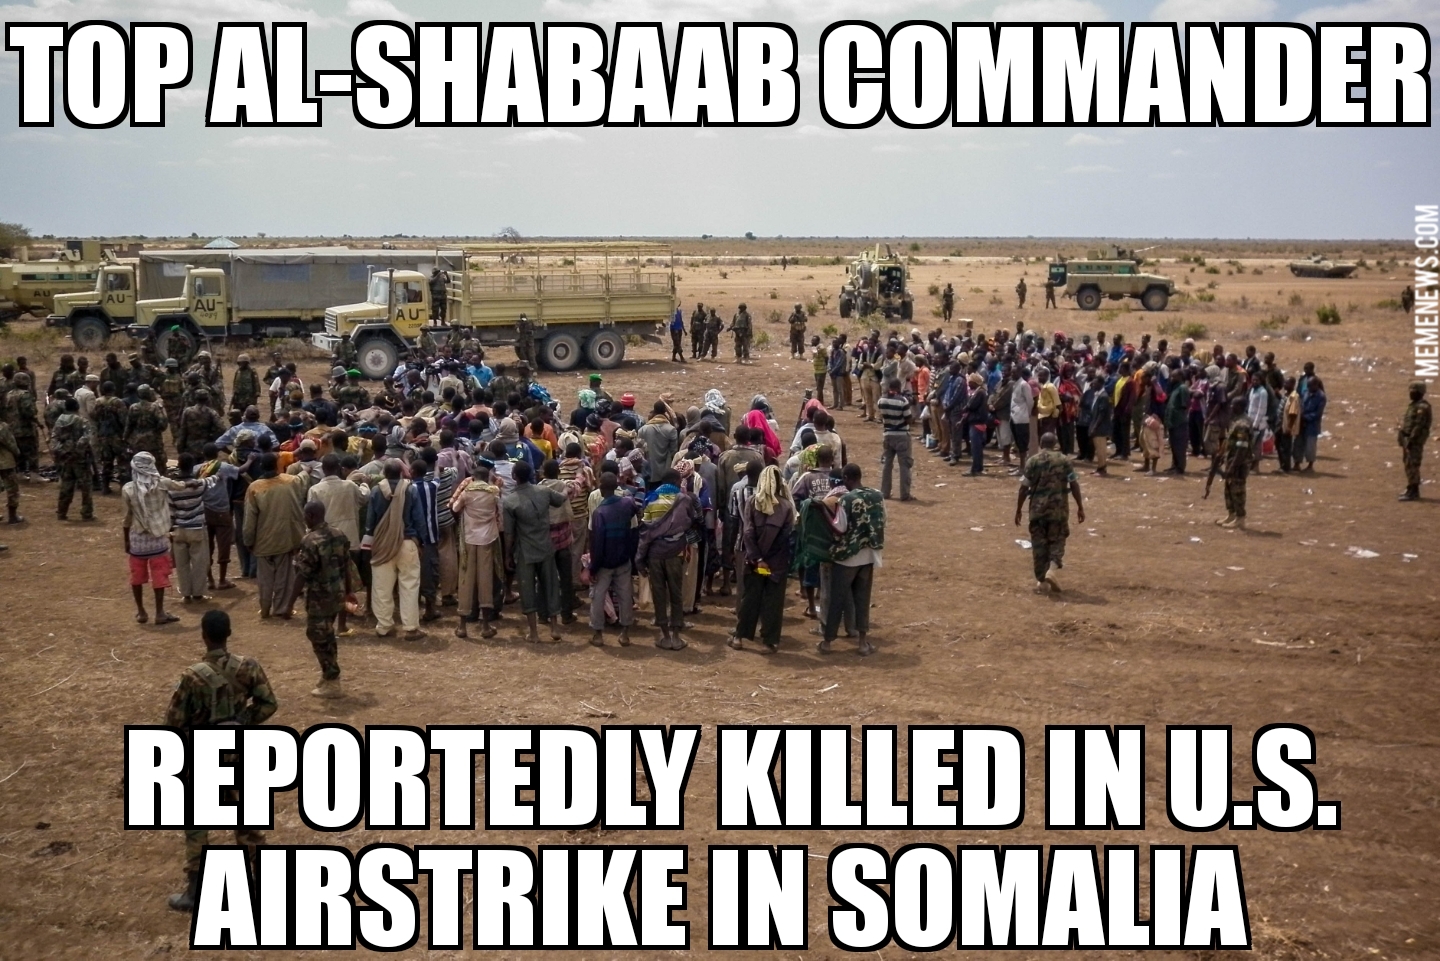 Al-Shabaab commander killed in U.S. strike